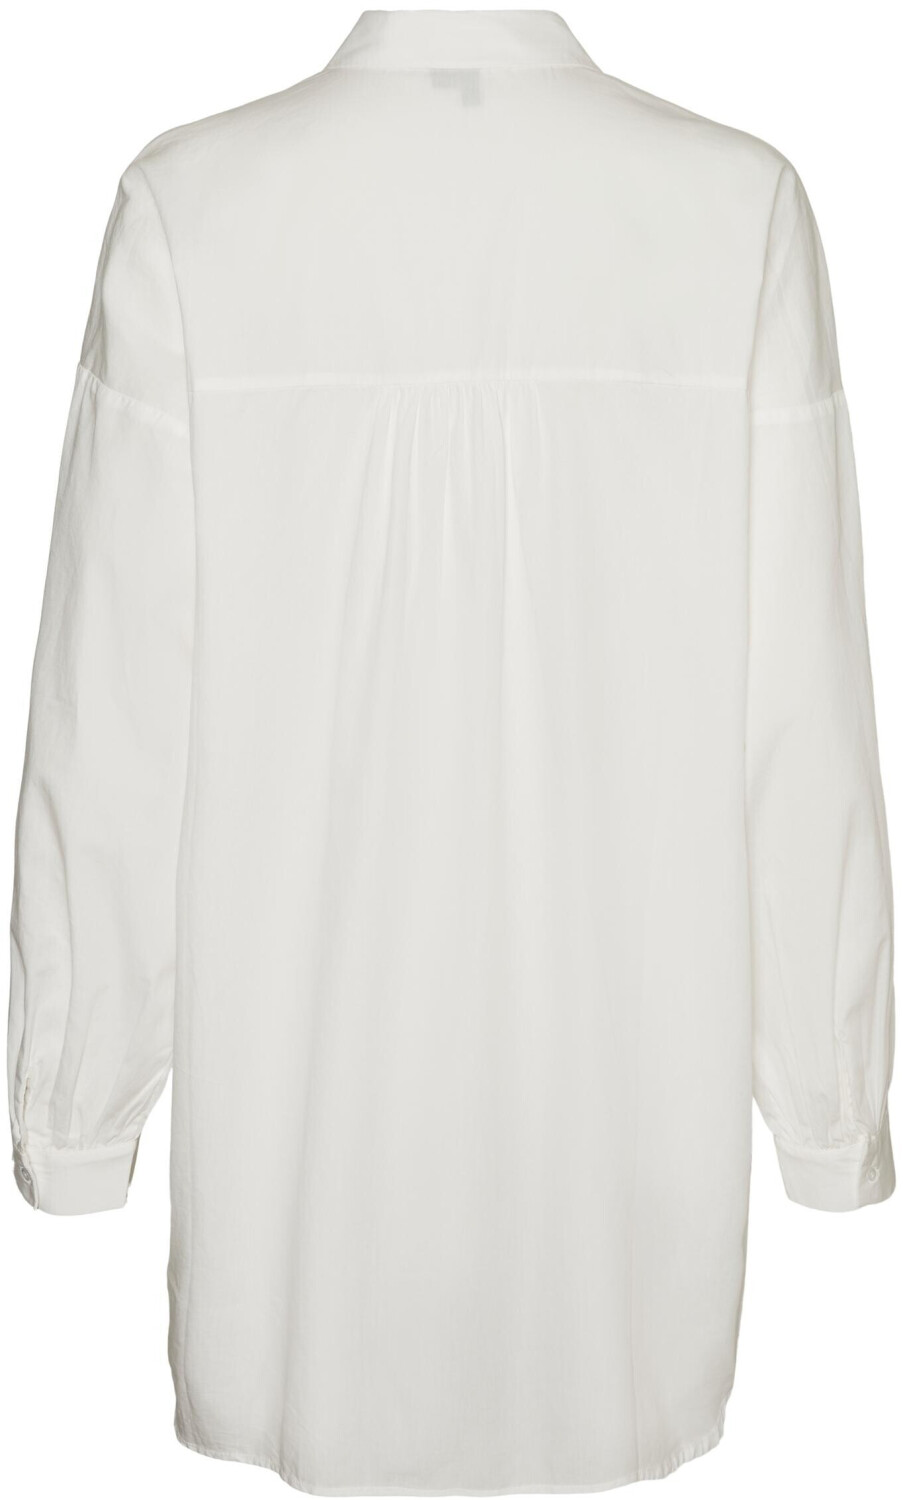 Vero Moda Vmbina L/s Oversize Noos € Preisvergleich Ga bei white ab 15,99 Shirt snow (10250576) 